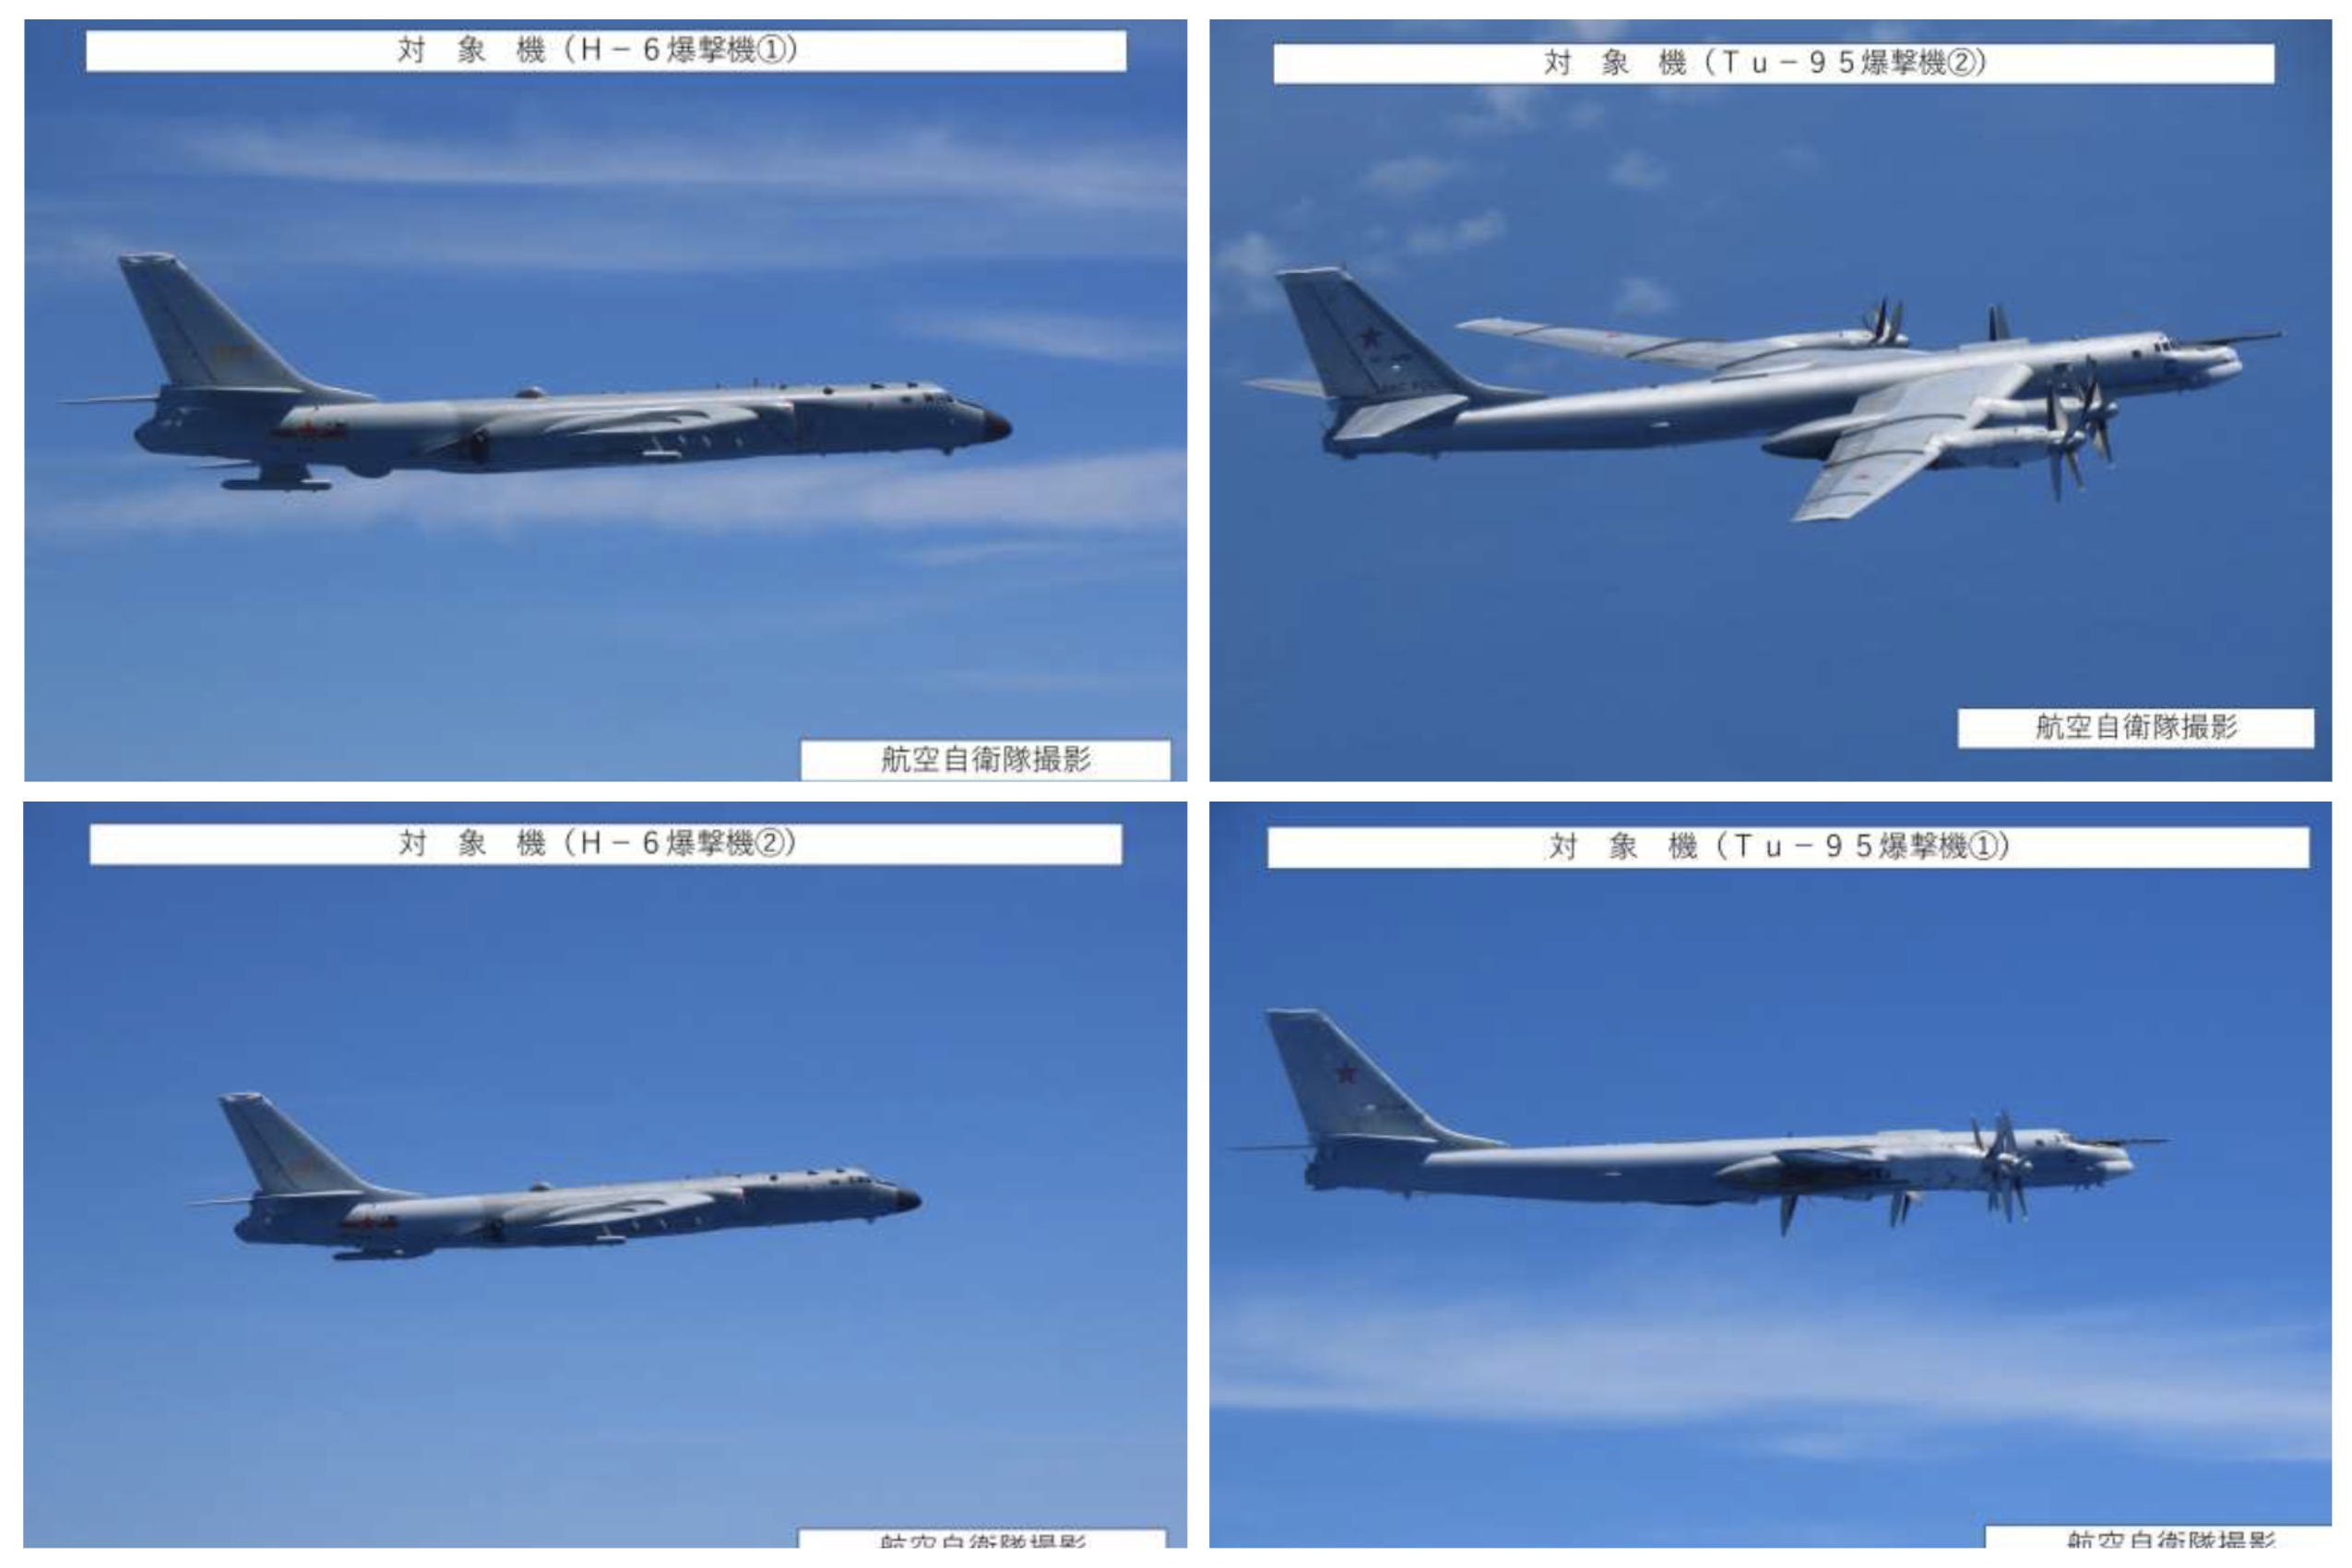 Russian, Chinese Bombers Make 2nd Round of Flights Near Japan, Korea - USNI  News